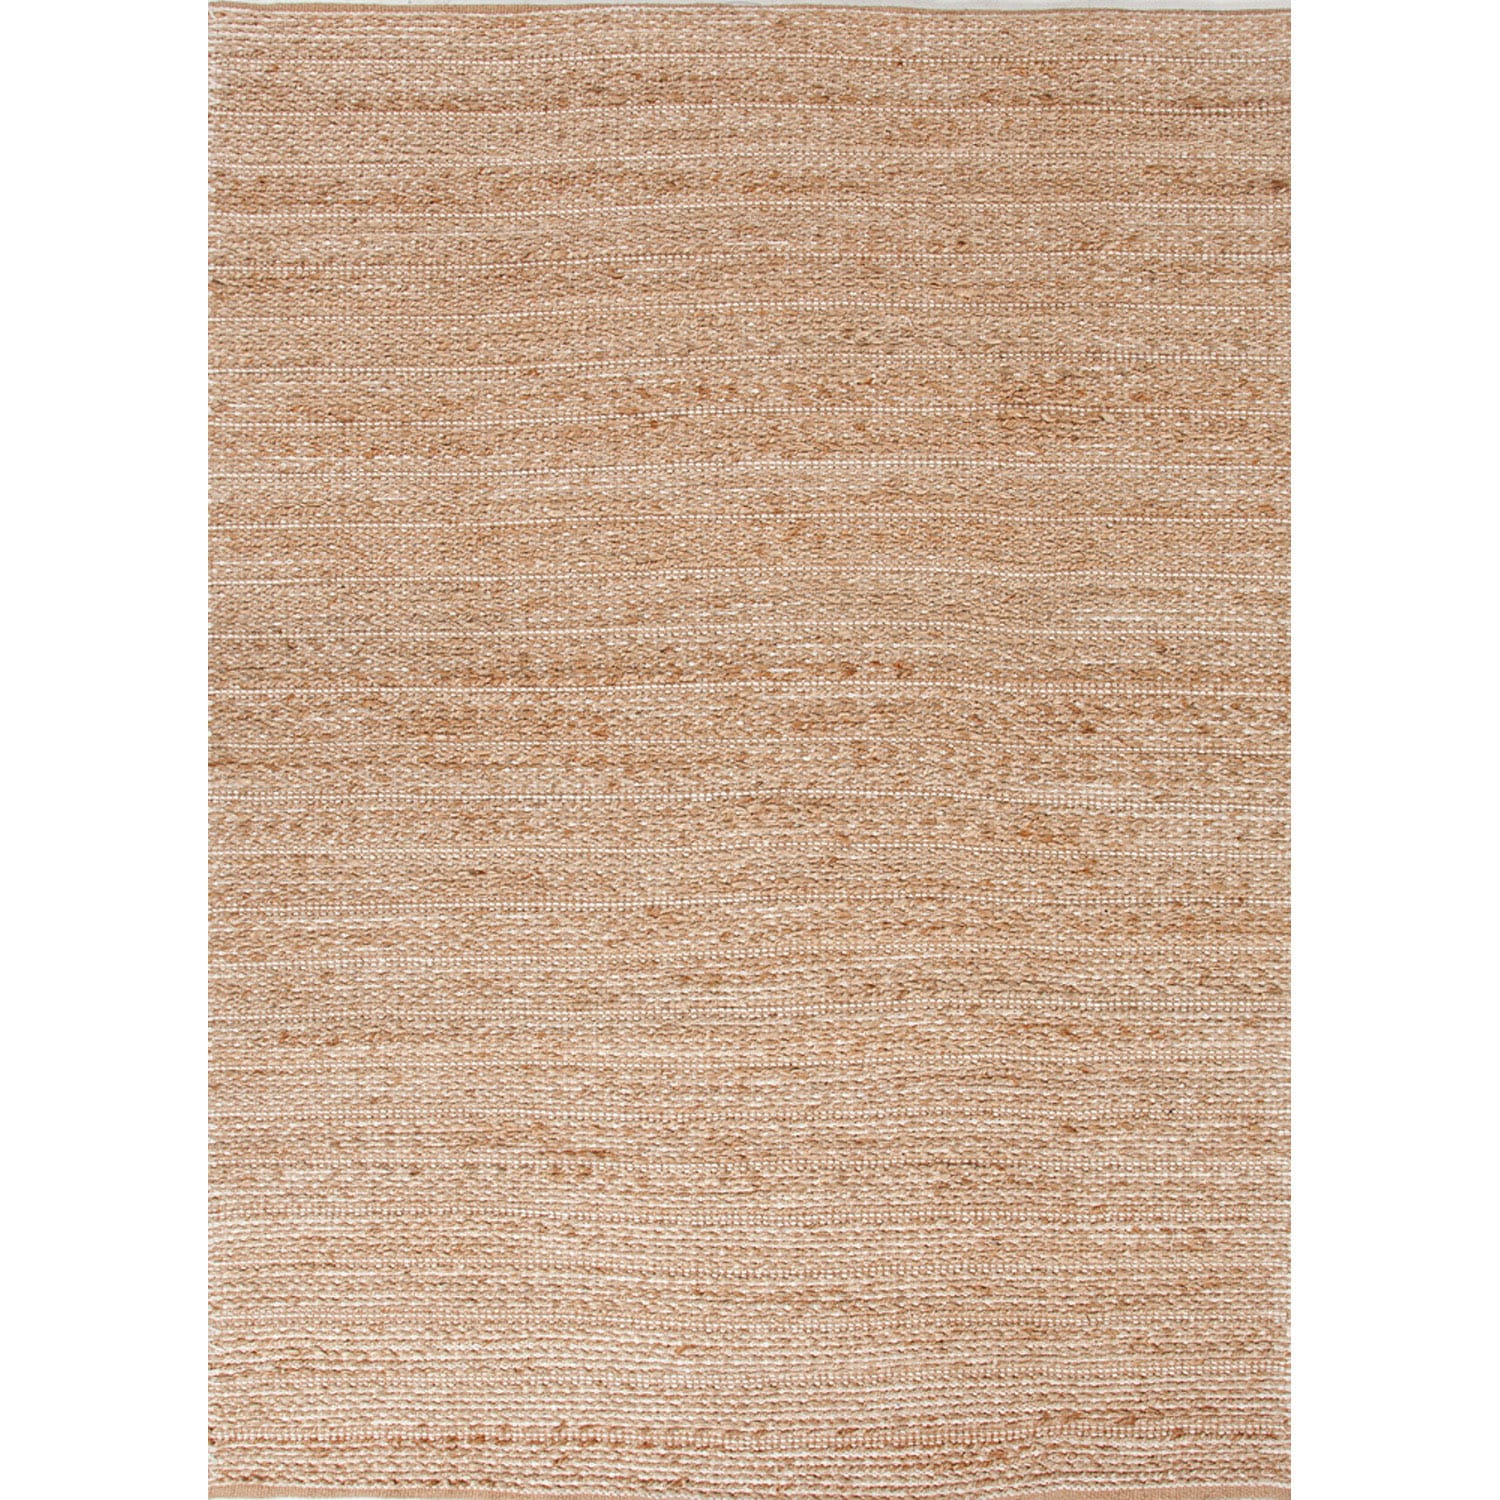 Handmade Naturals Solid Pattern Brown Rug (5 X 8)